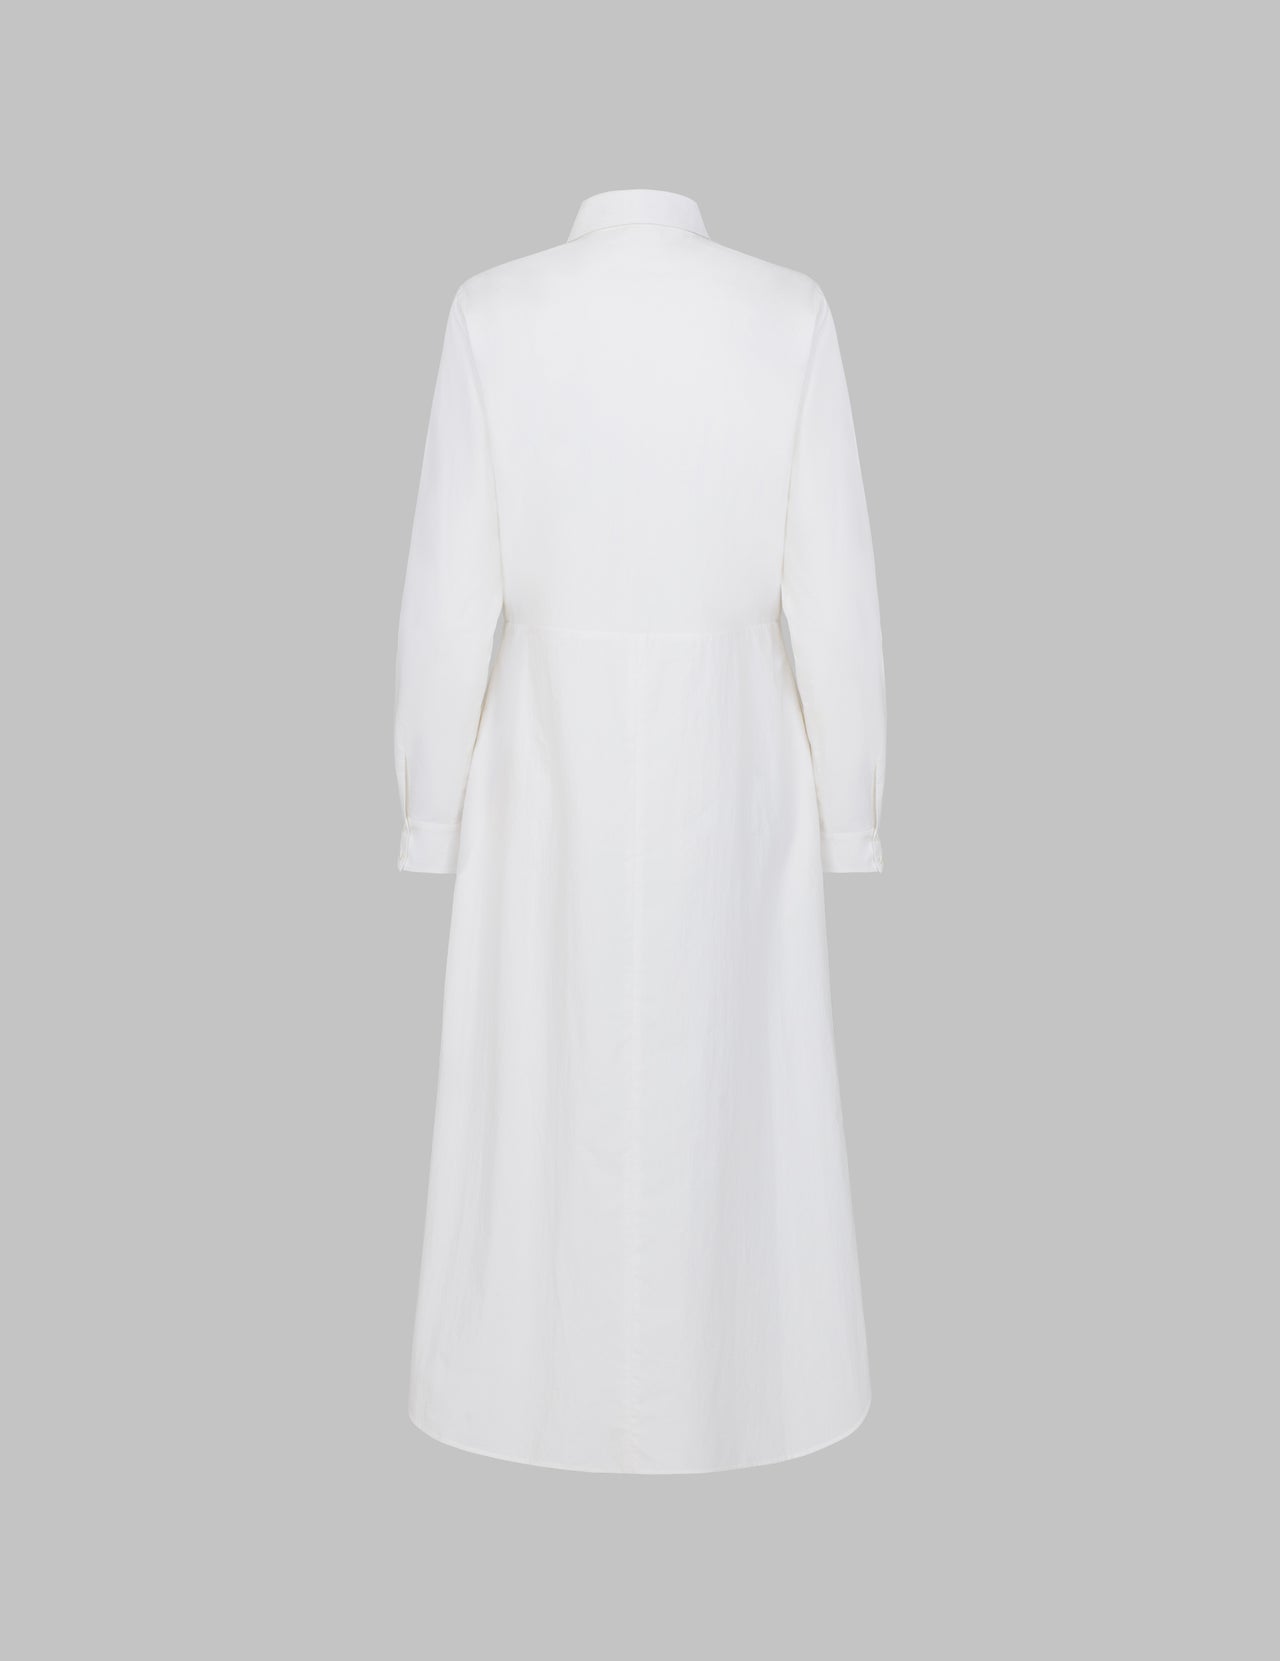  White Cotton Mercara Shirt Dress with Pleated Smocking 